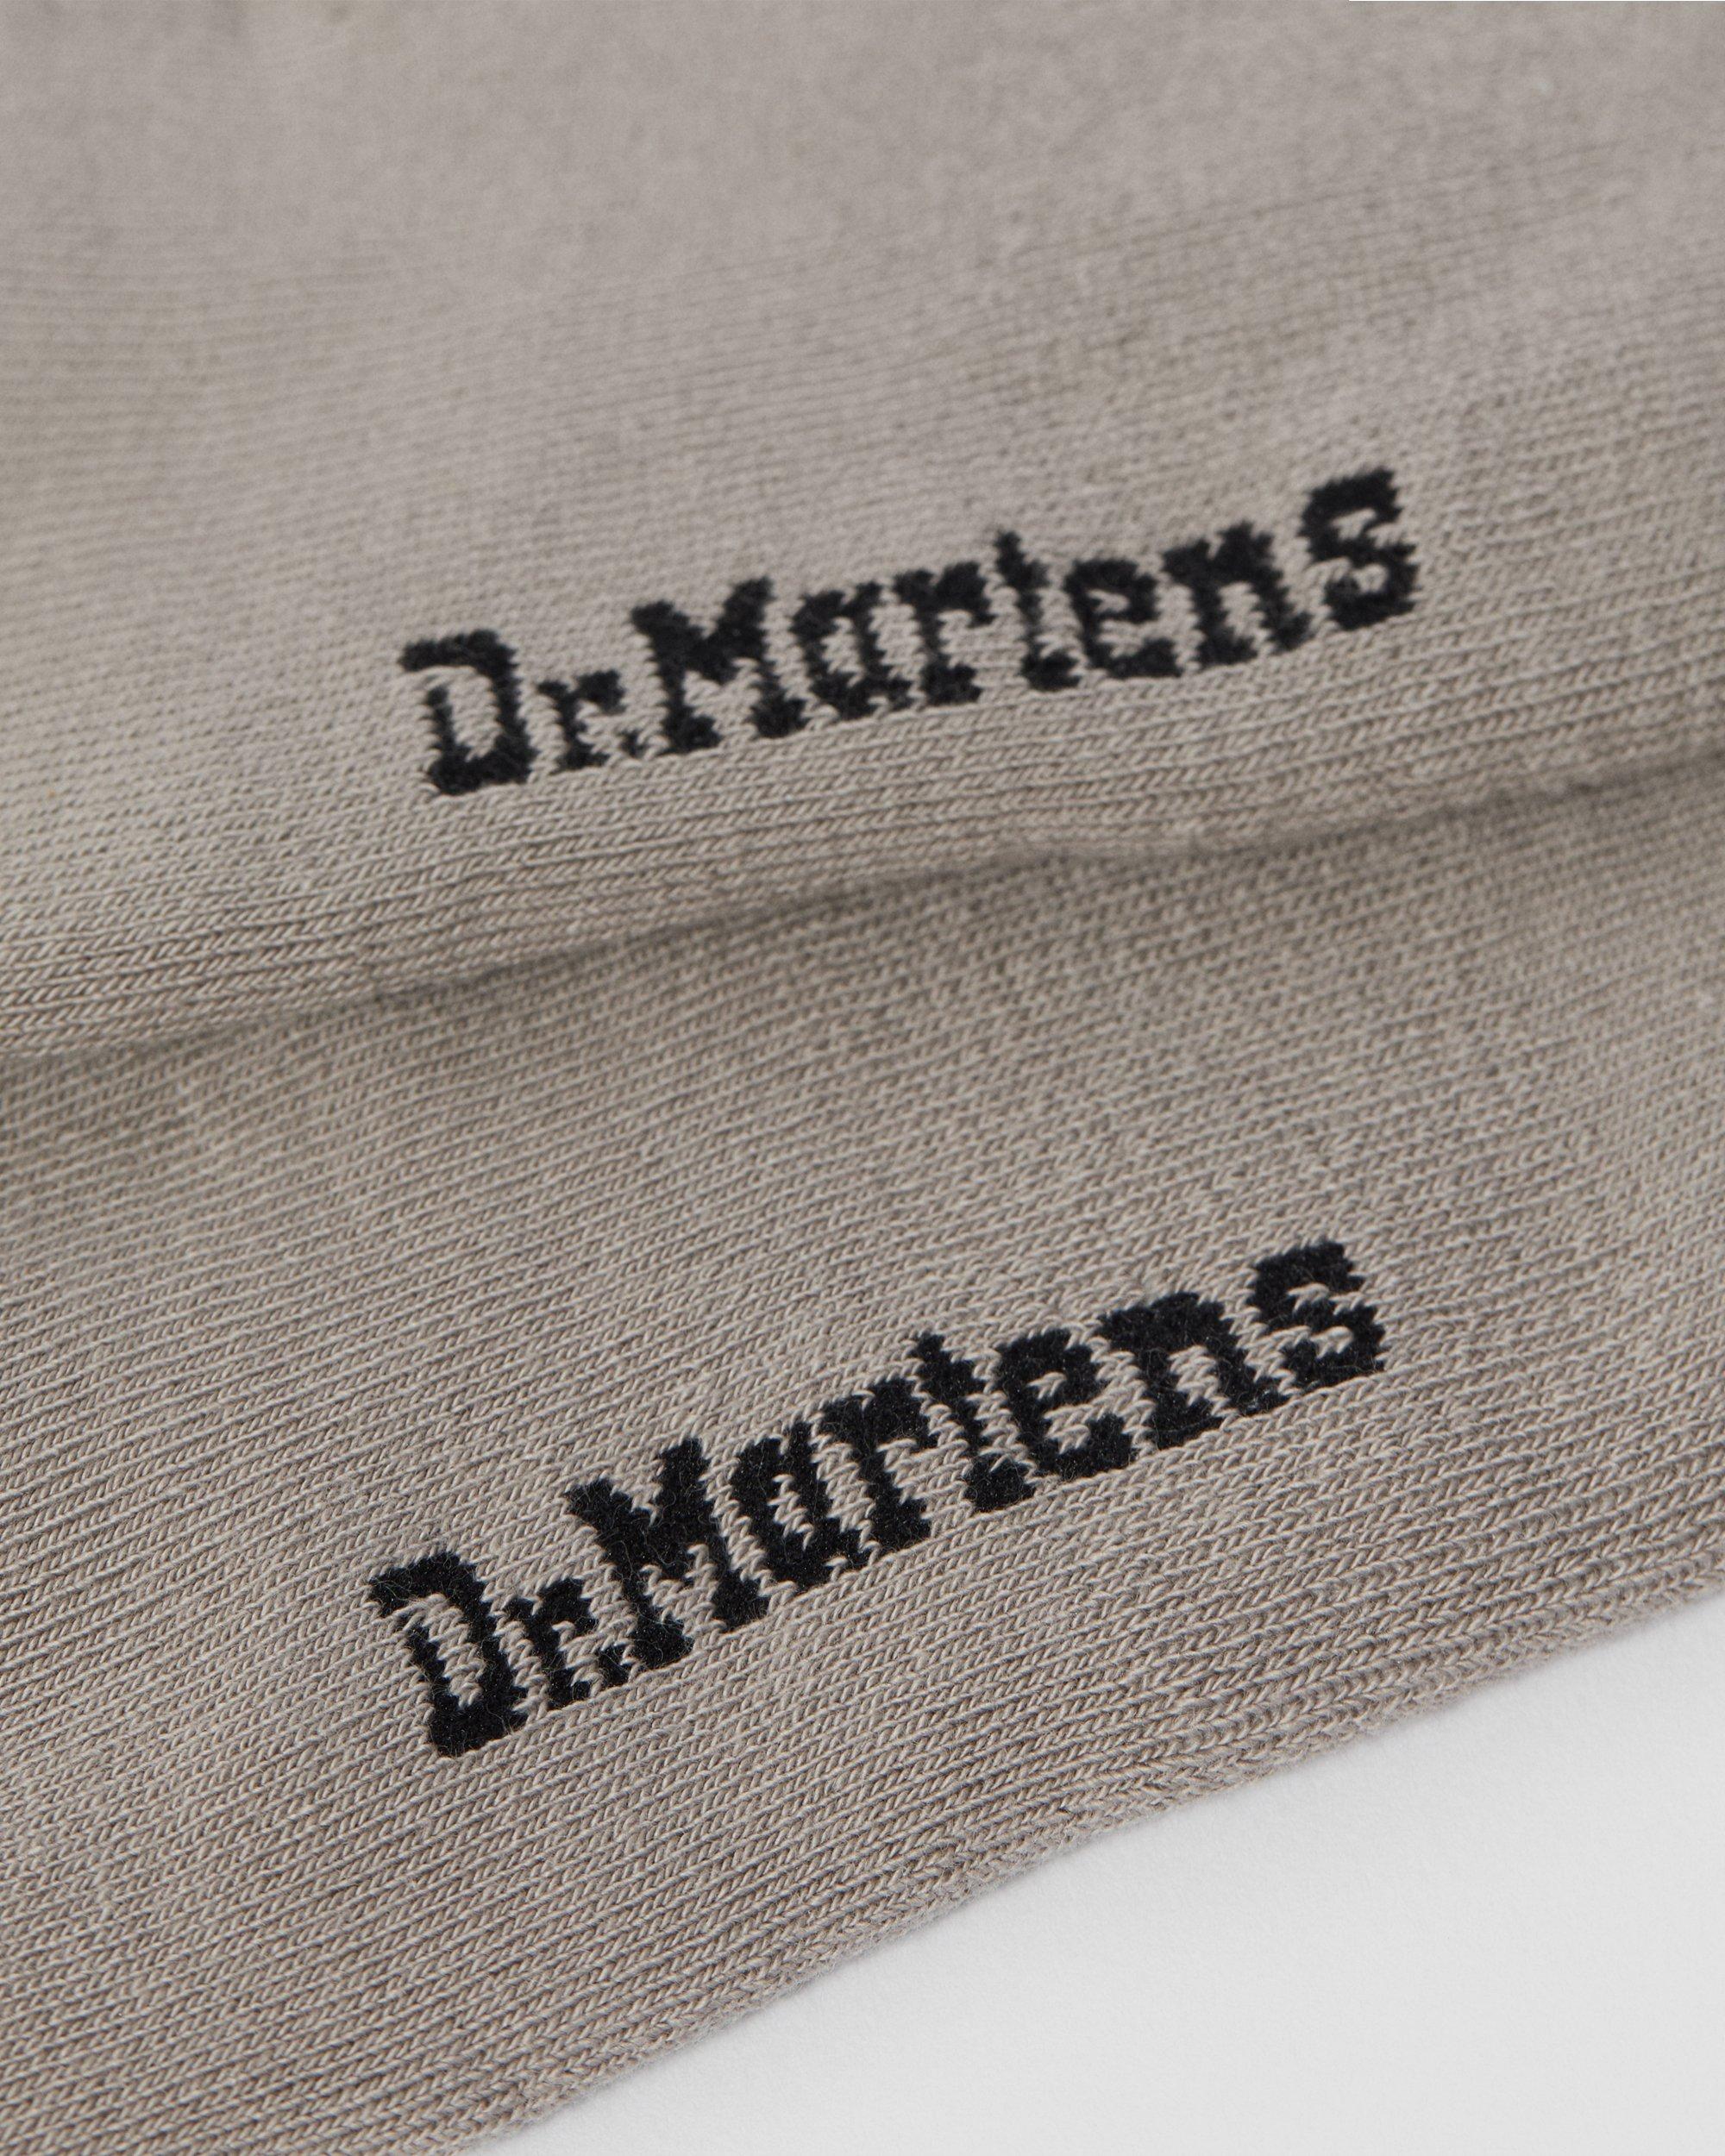 dr martens and socks